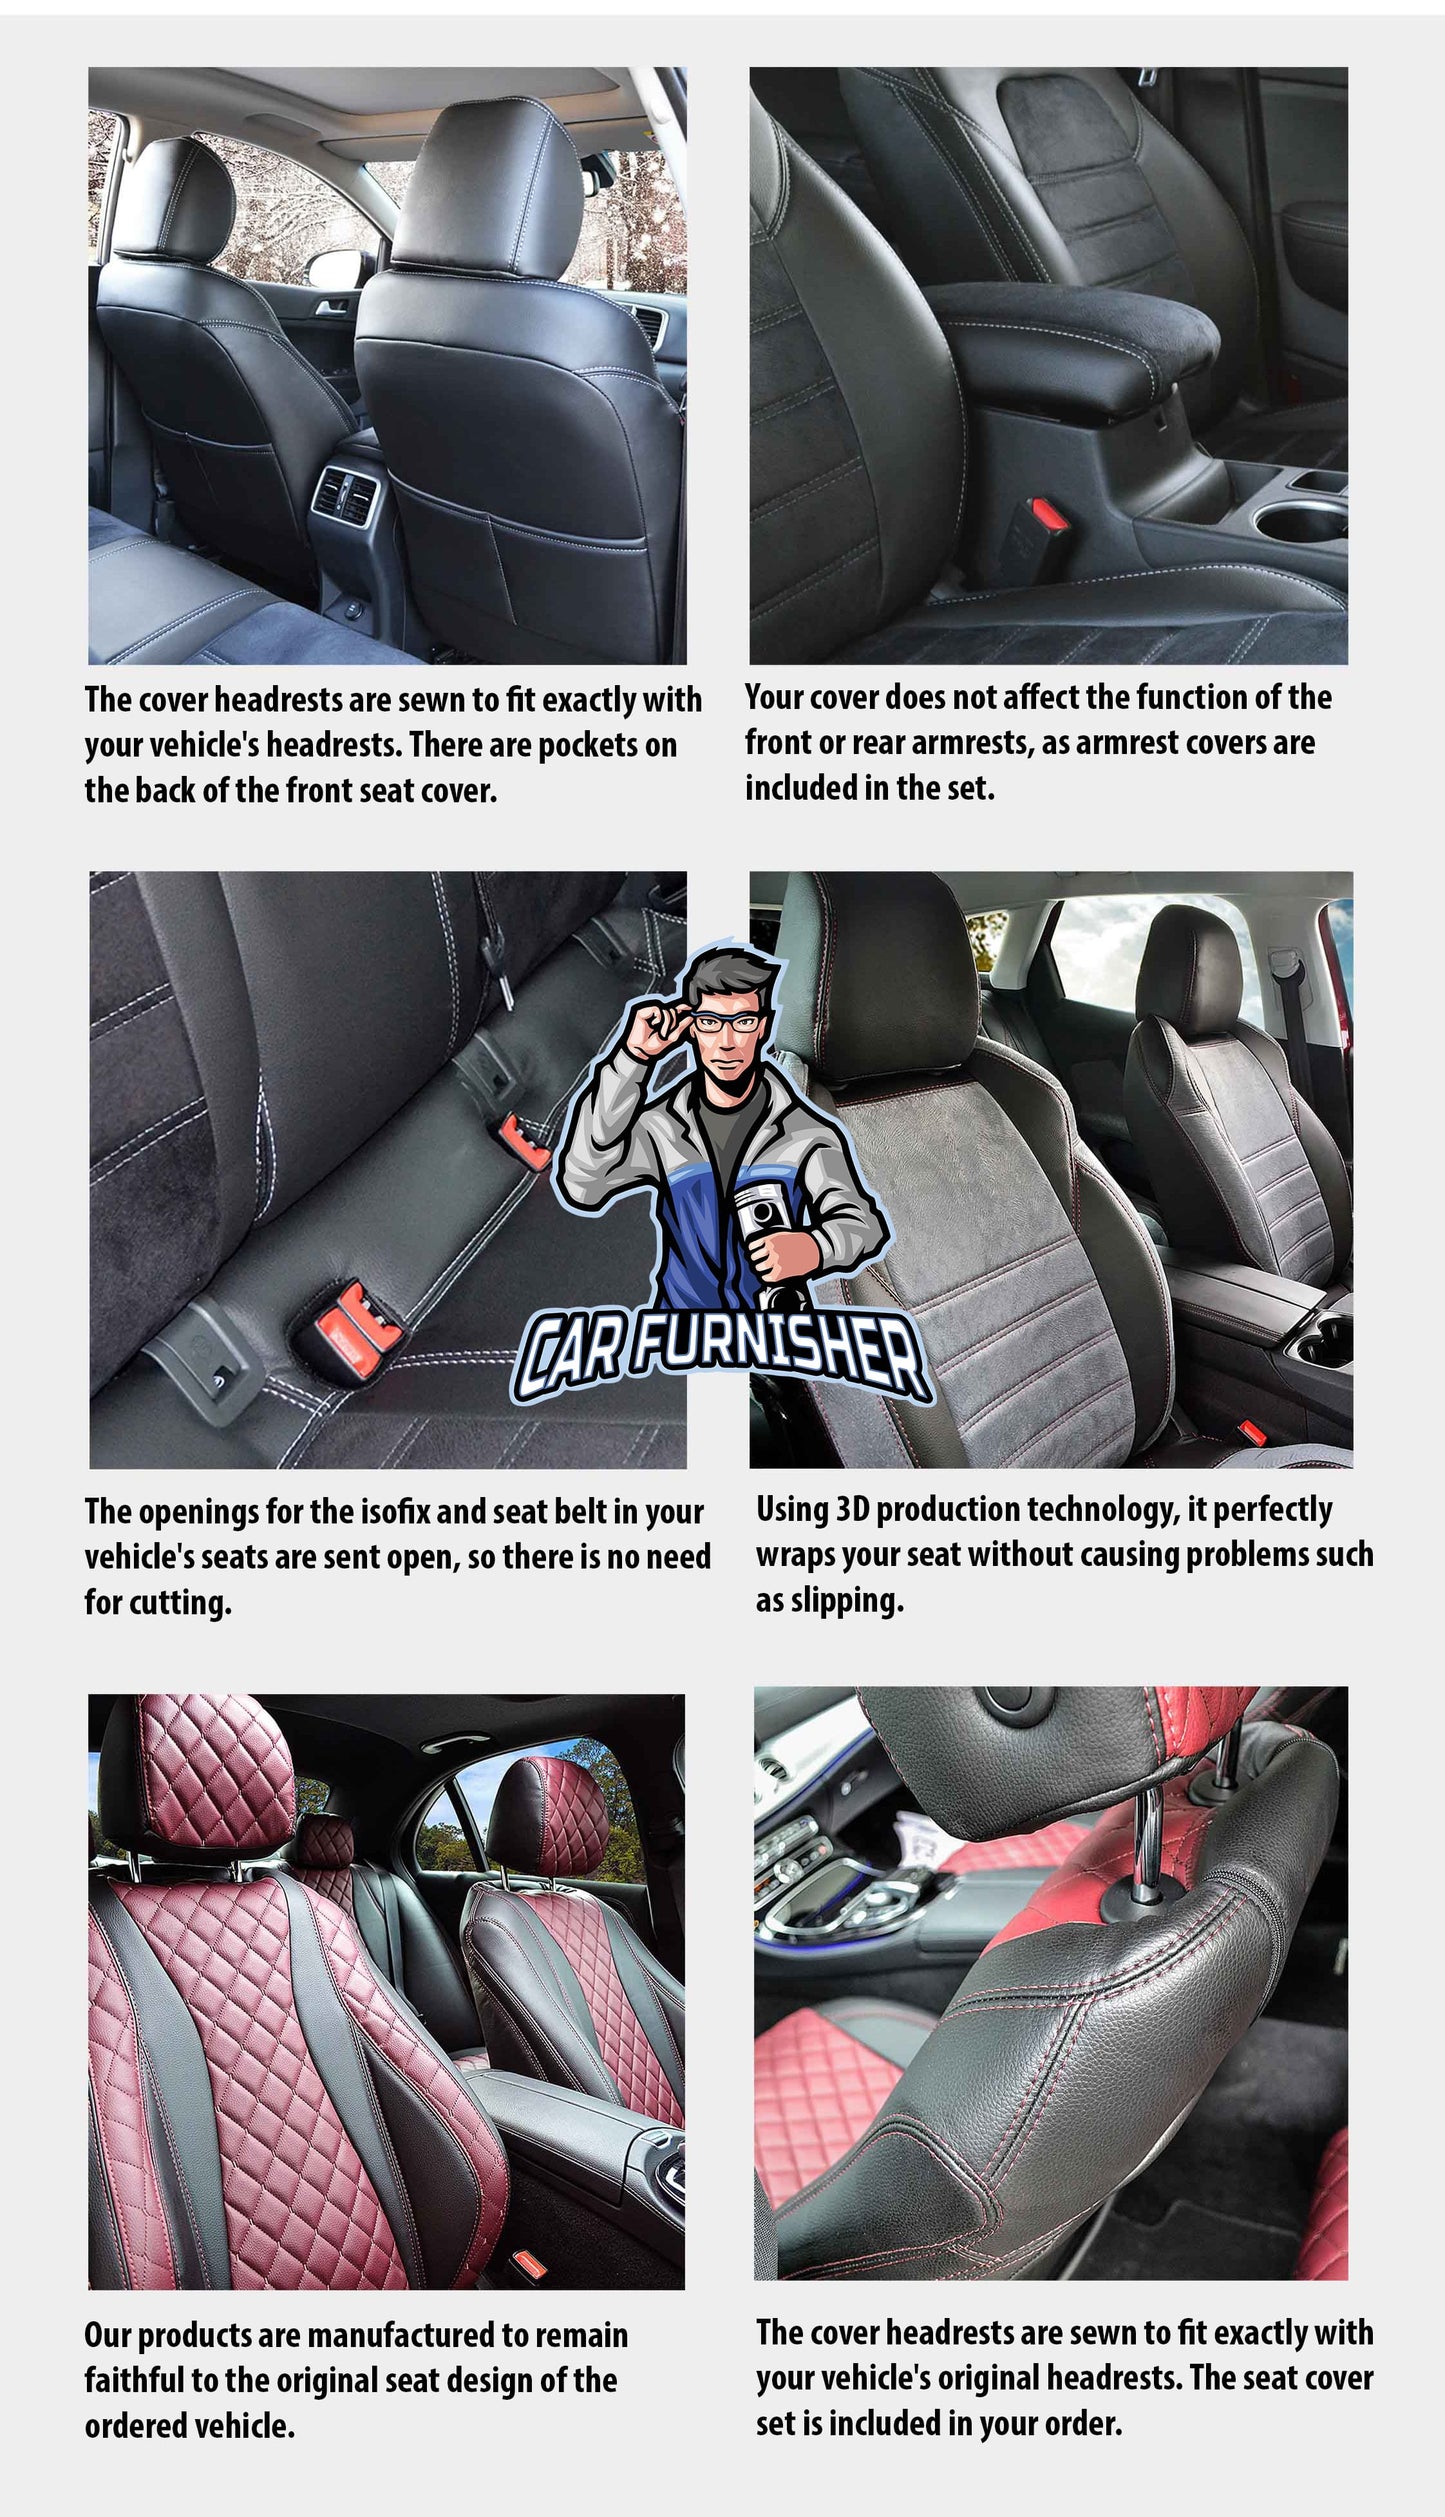 Hyundai Matrix Seat Covers Milano Suede Design Smoked Black Leather & Suede Fabric